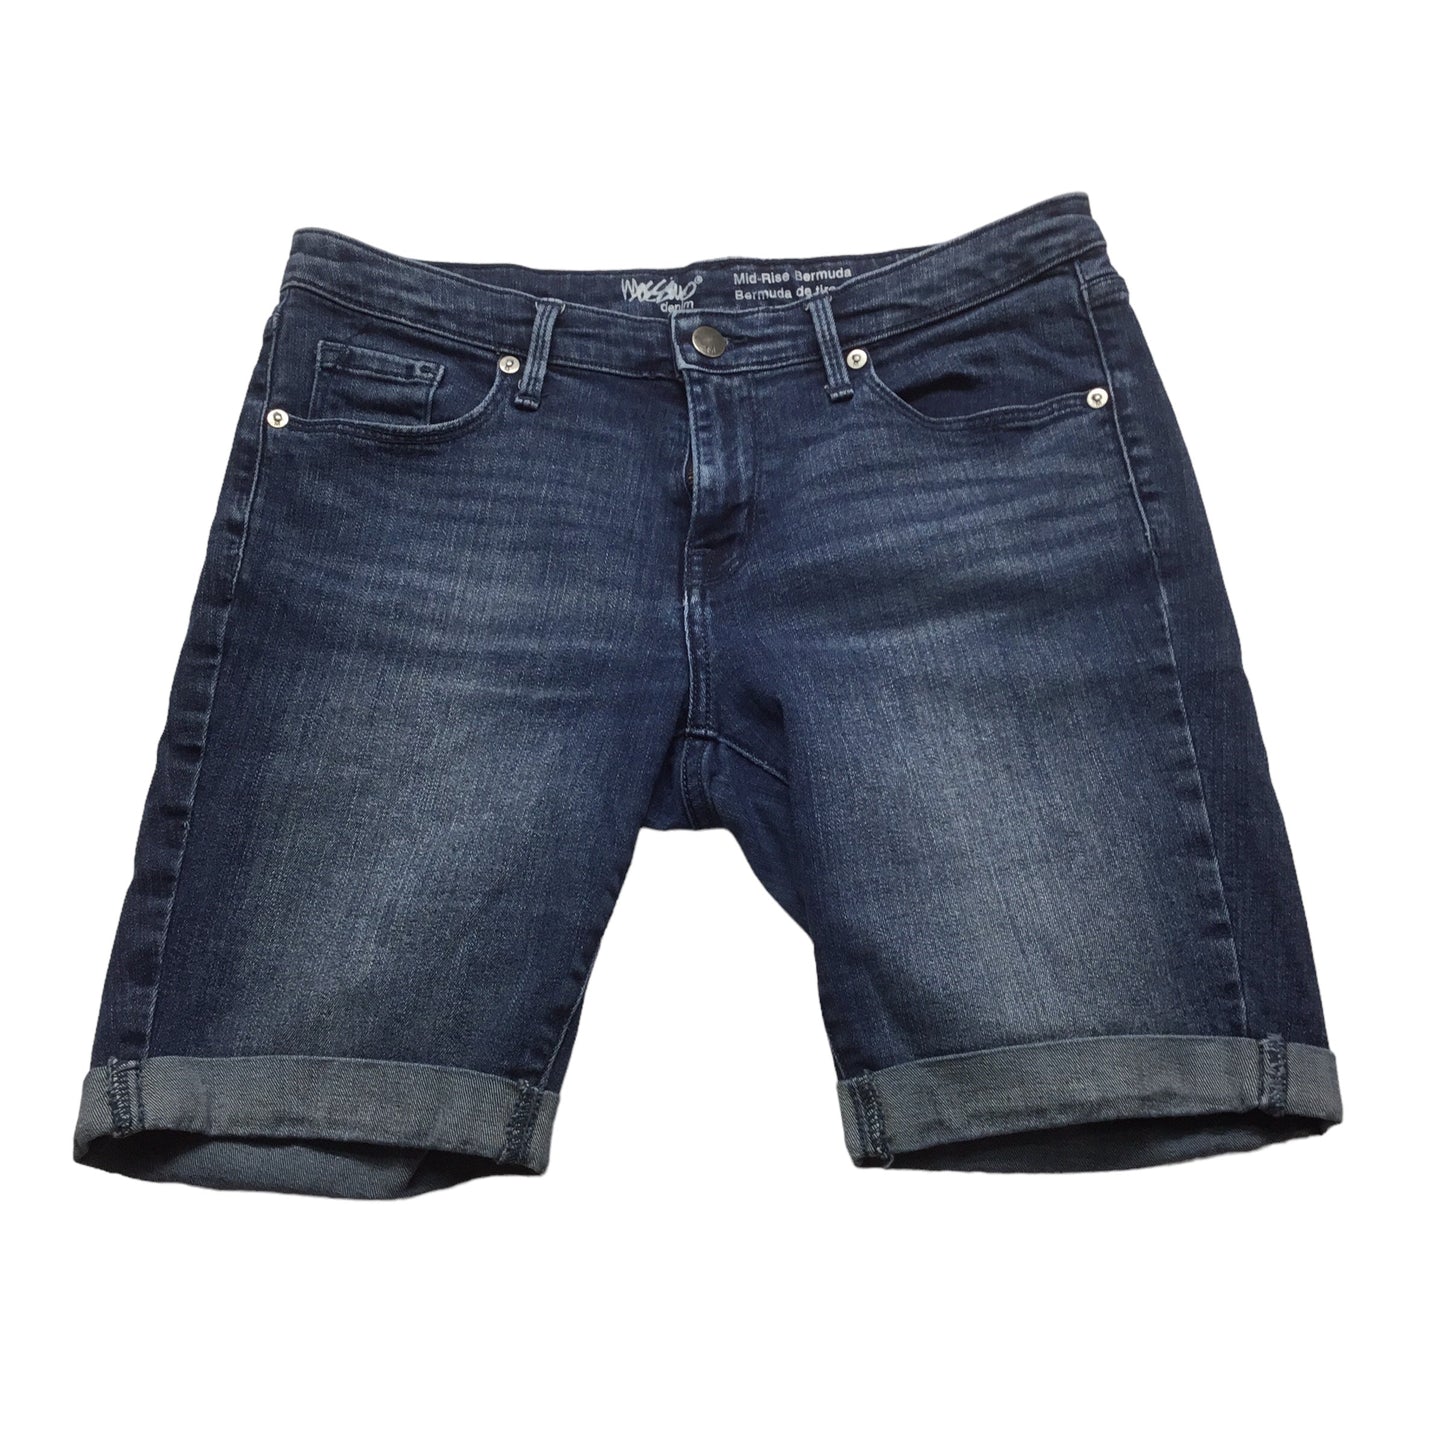 Blue Denim Shorts Mossimo, Size 6